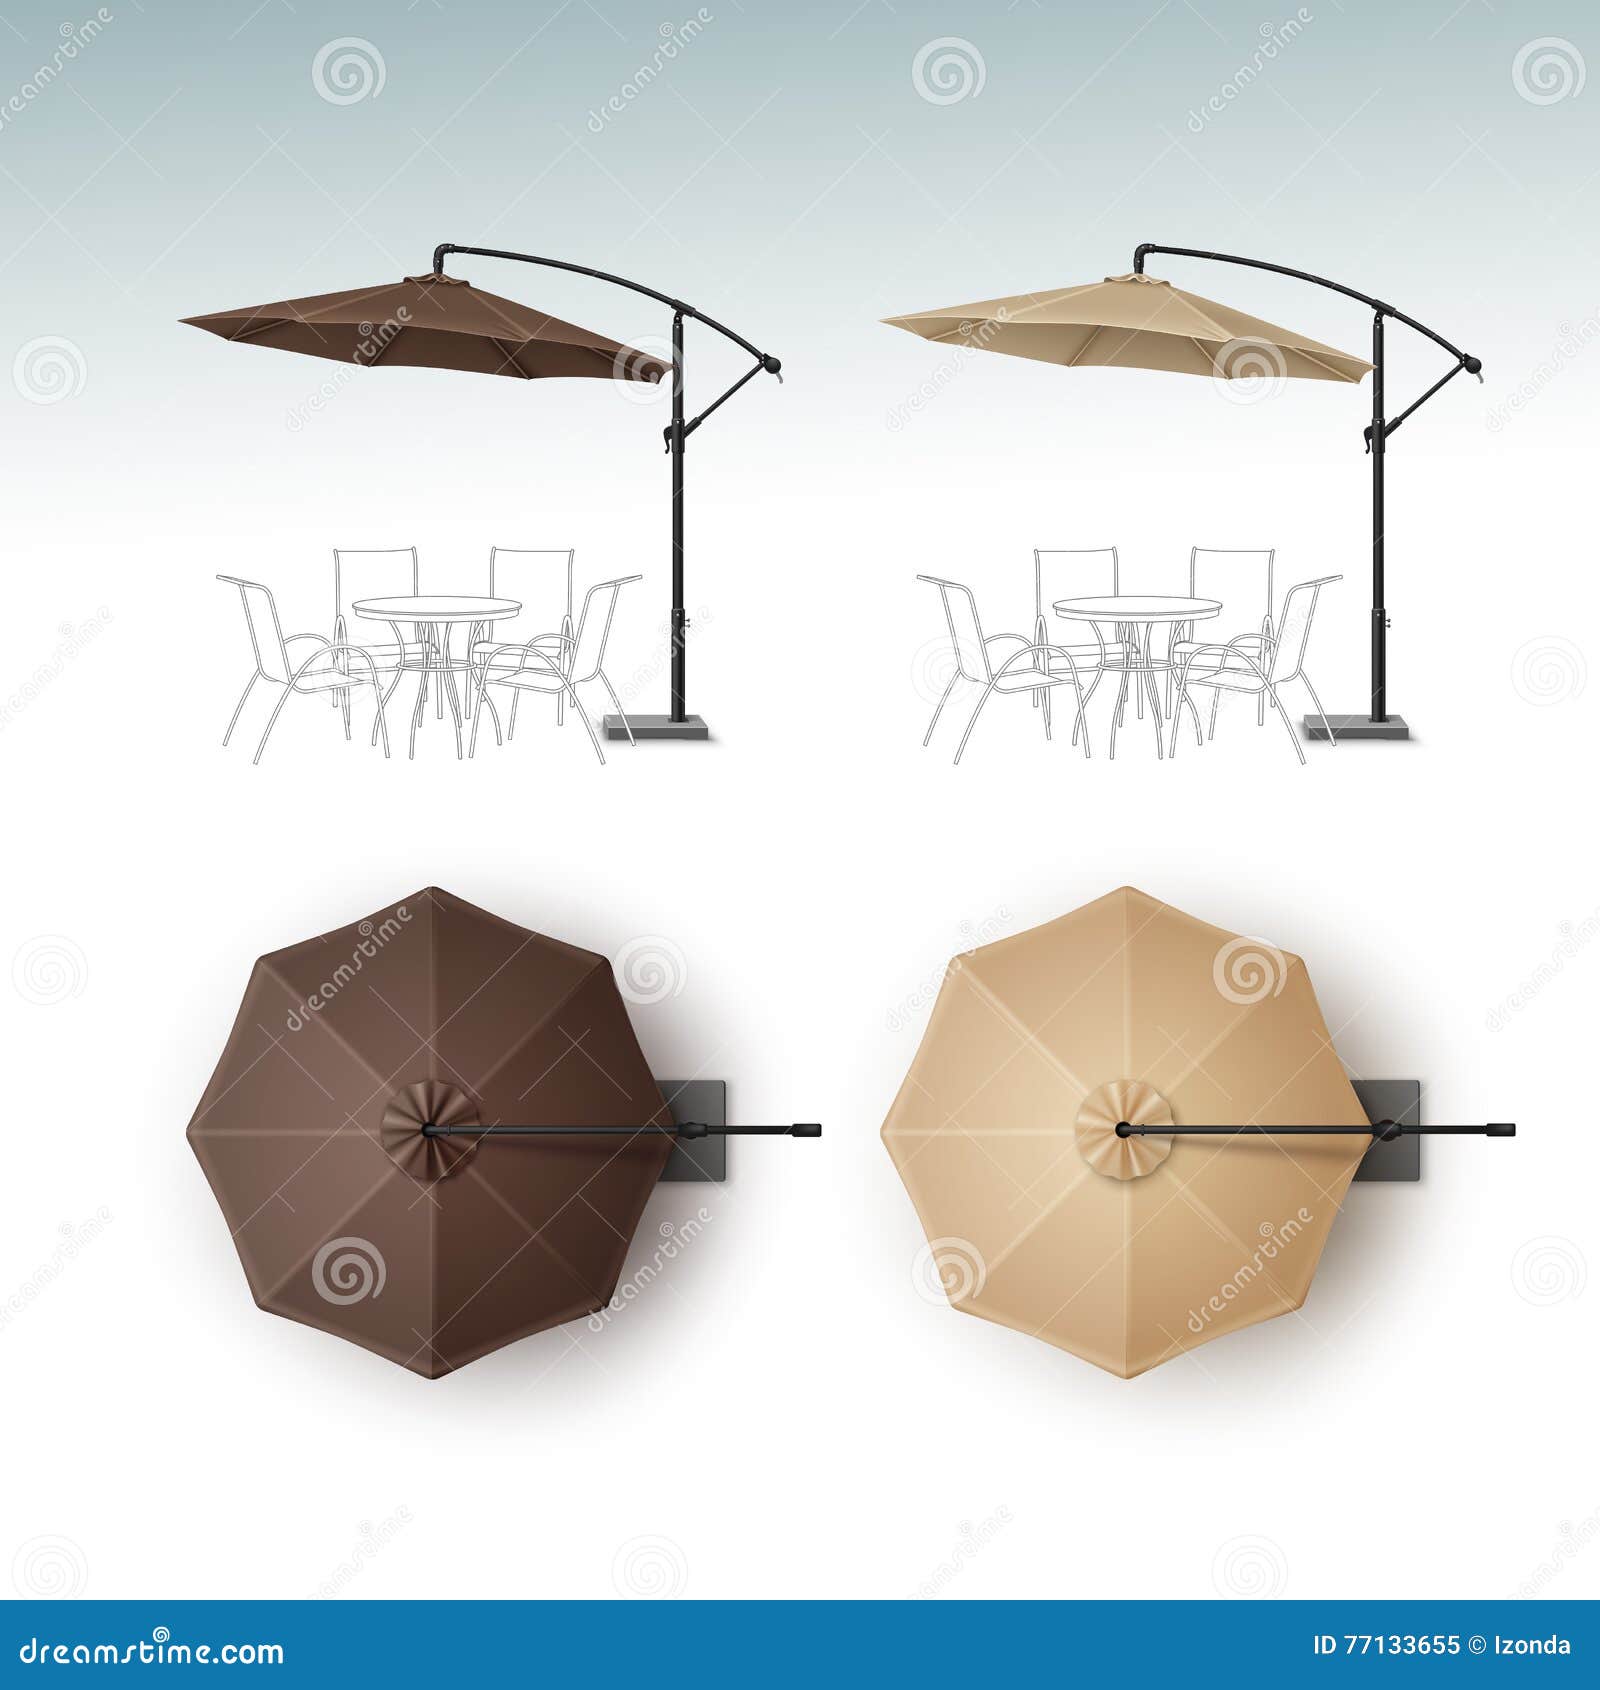 set of beach cafe bar pub umbrella parasol